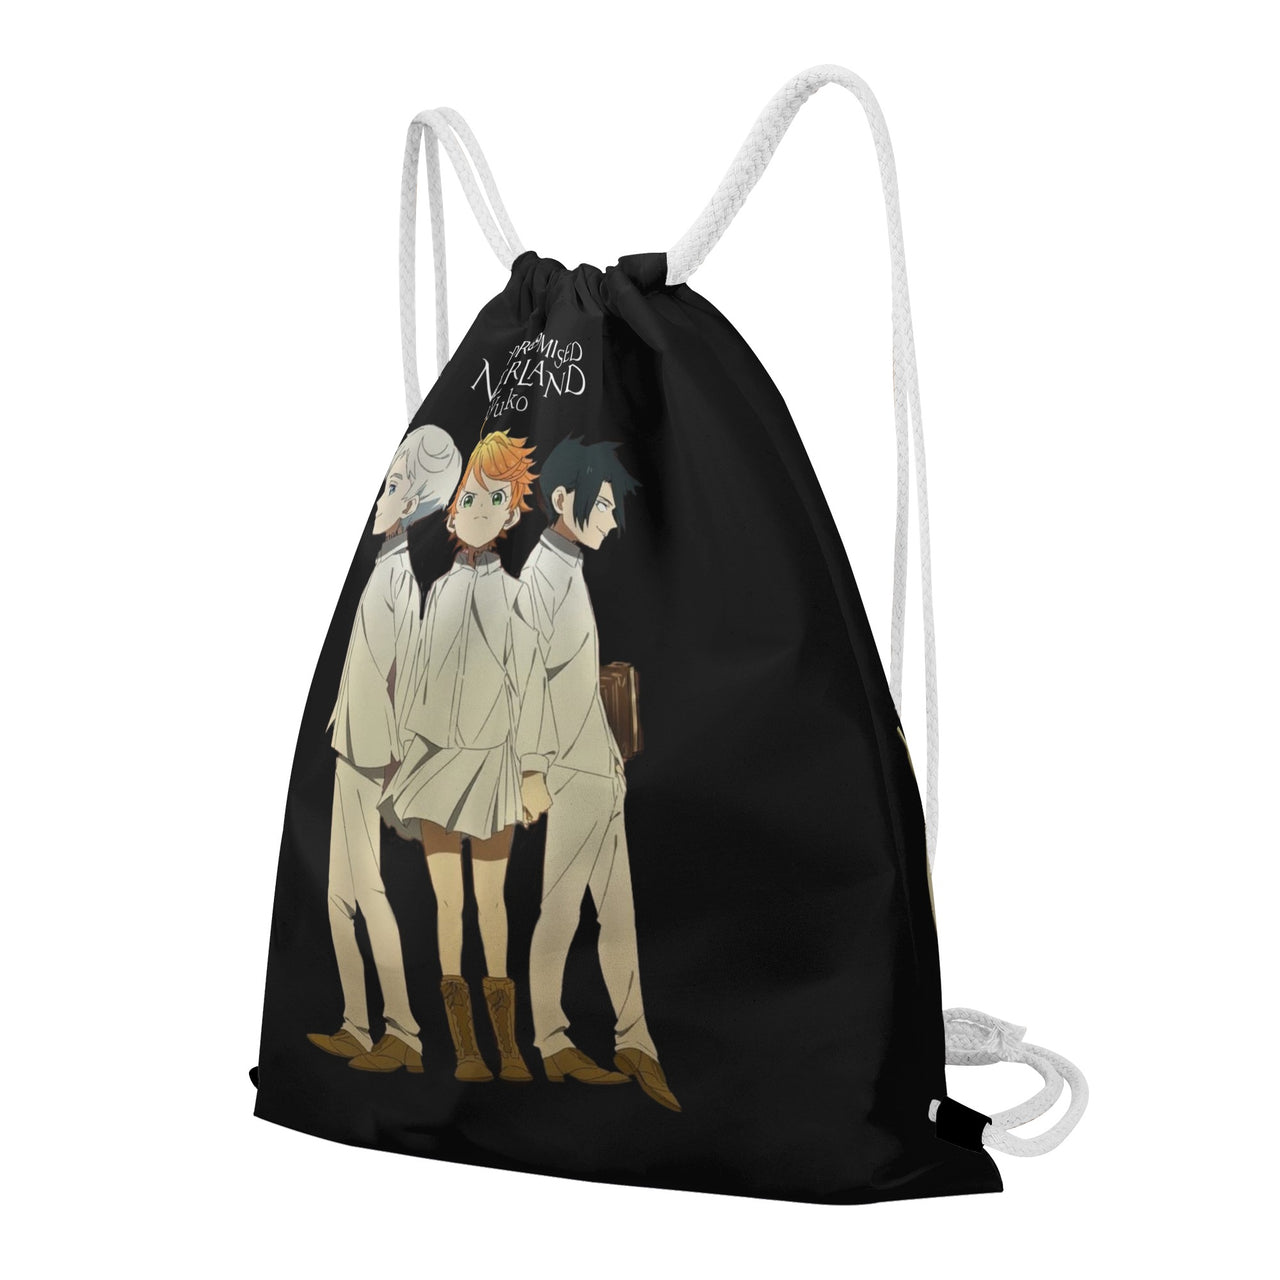 The Promised Neverland Anime Drawstring Bag